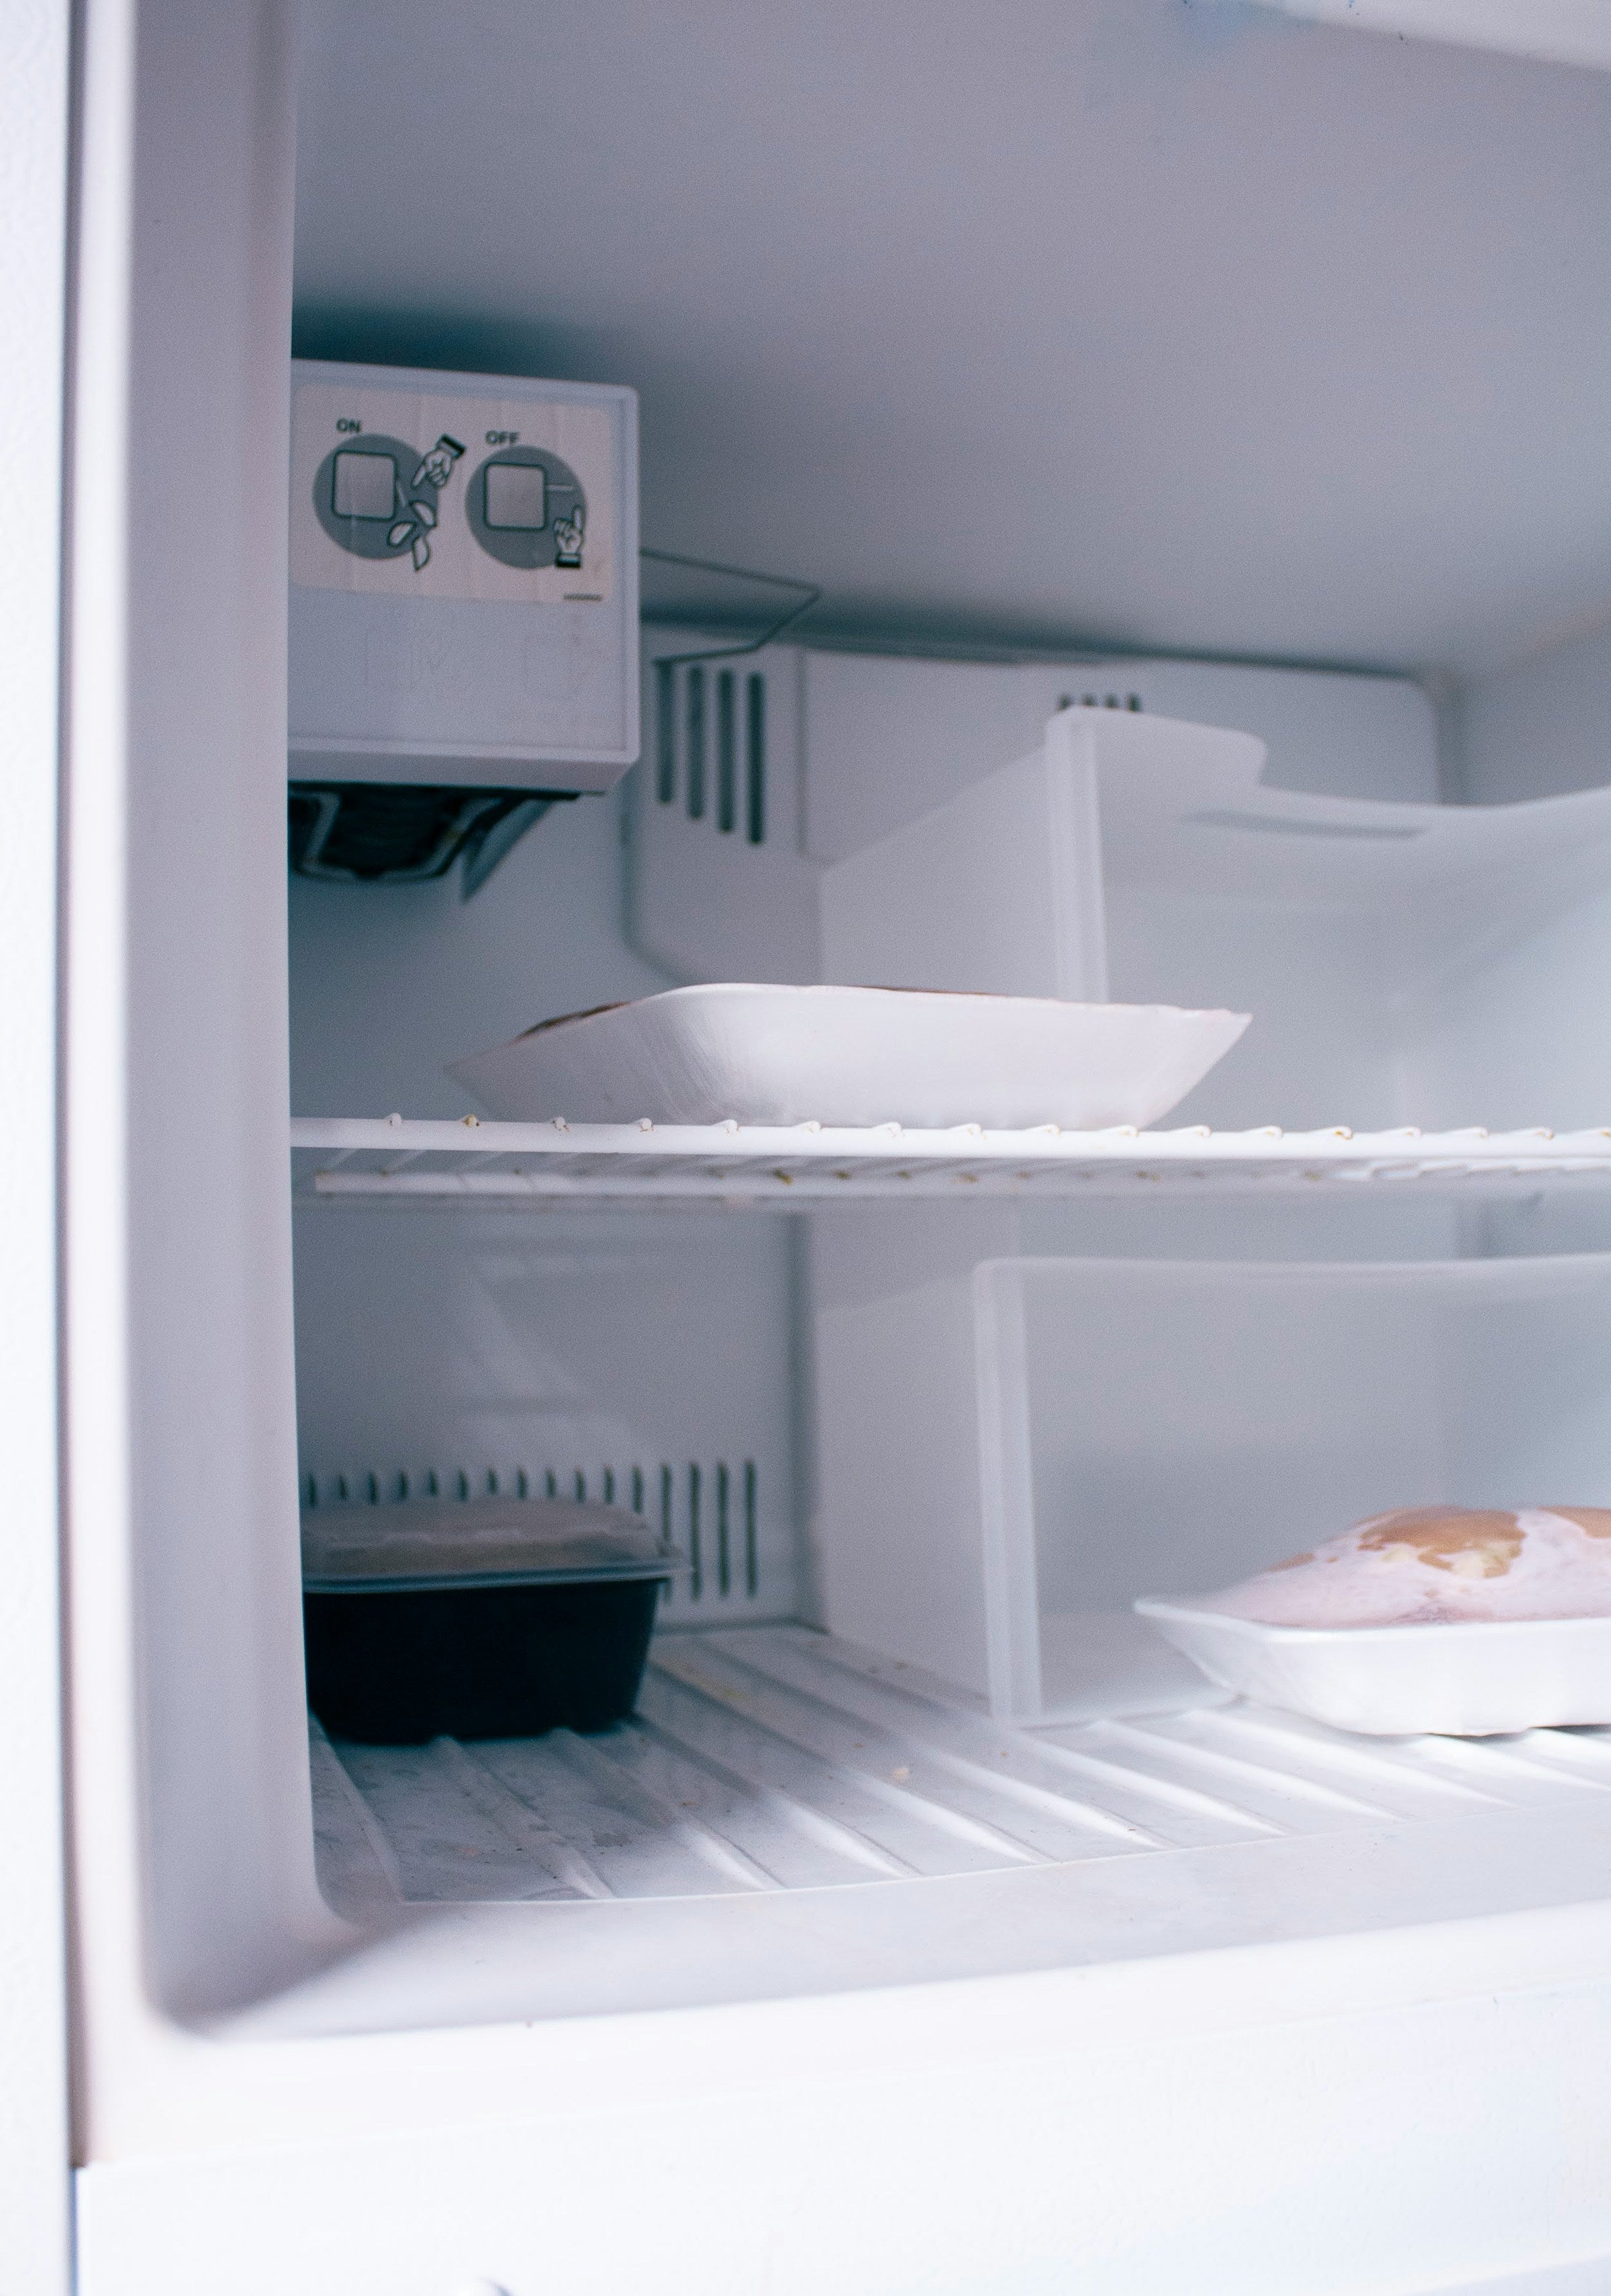 How Does Freezer Burn Happen? | Fridge.com